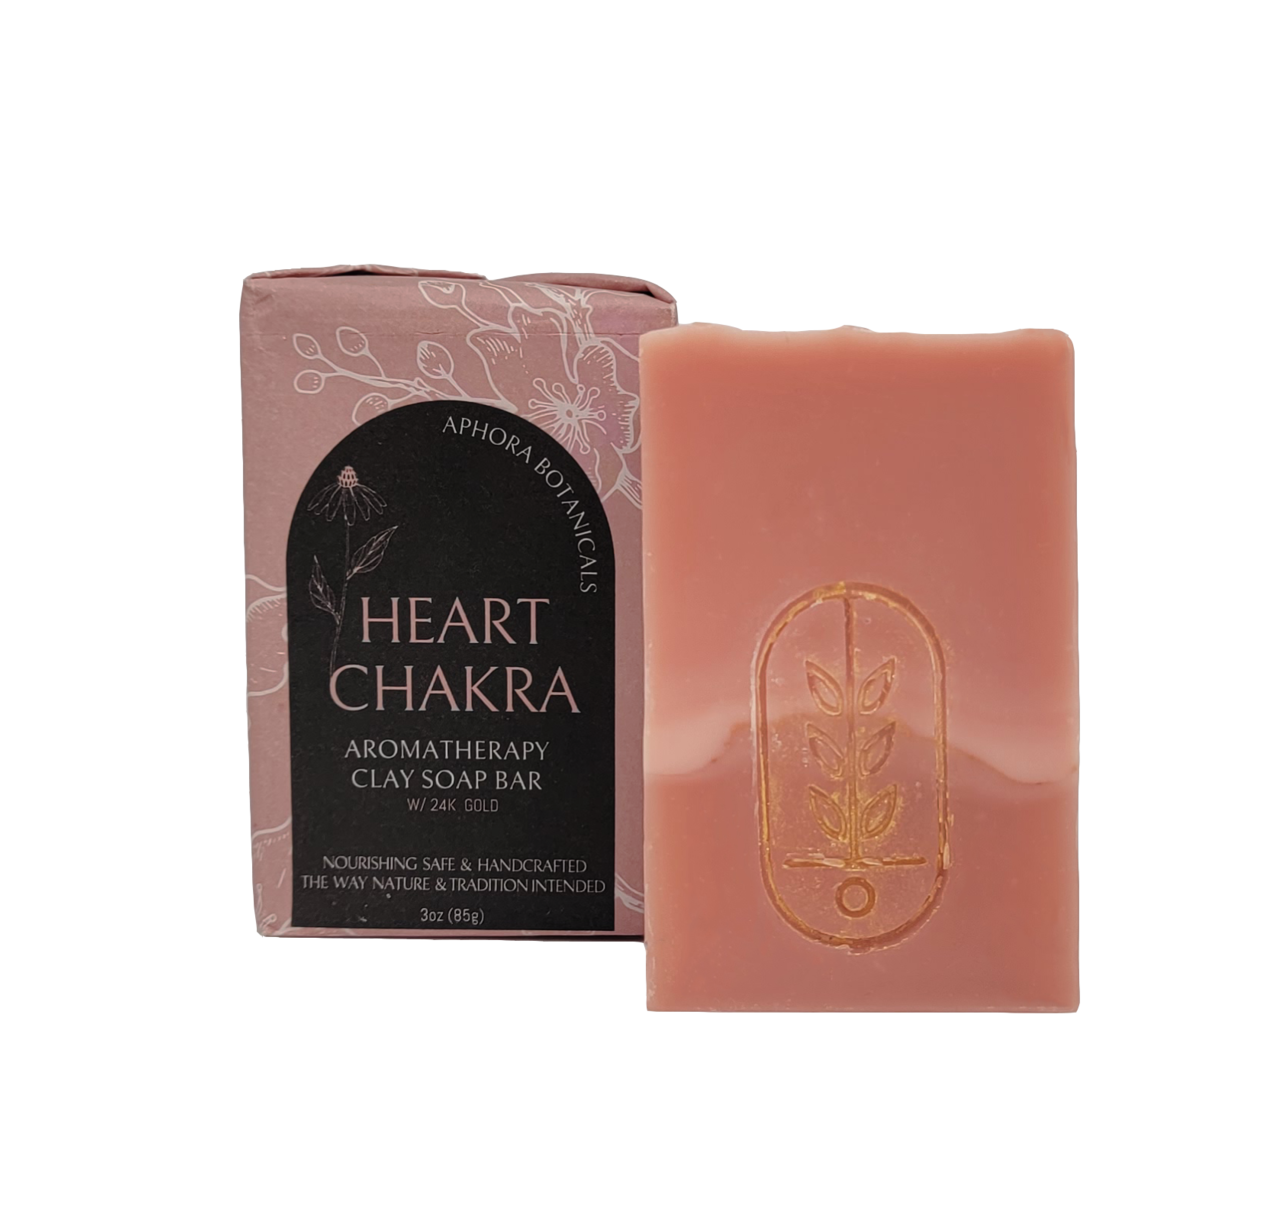 Heart Chakra Aromatherapy Clay Soap Bar - Aphora Botanicals